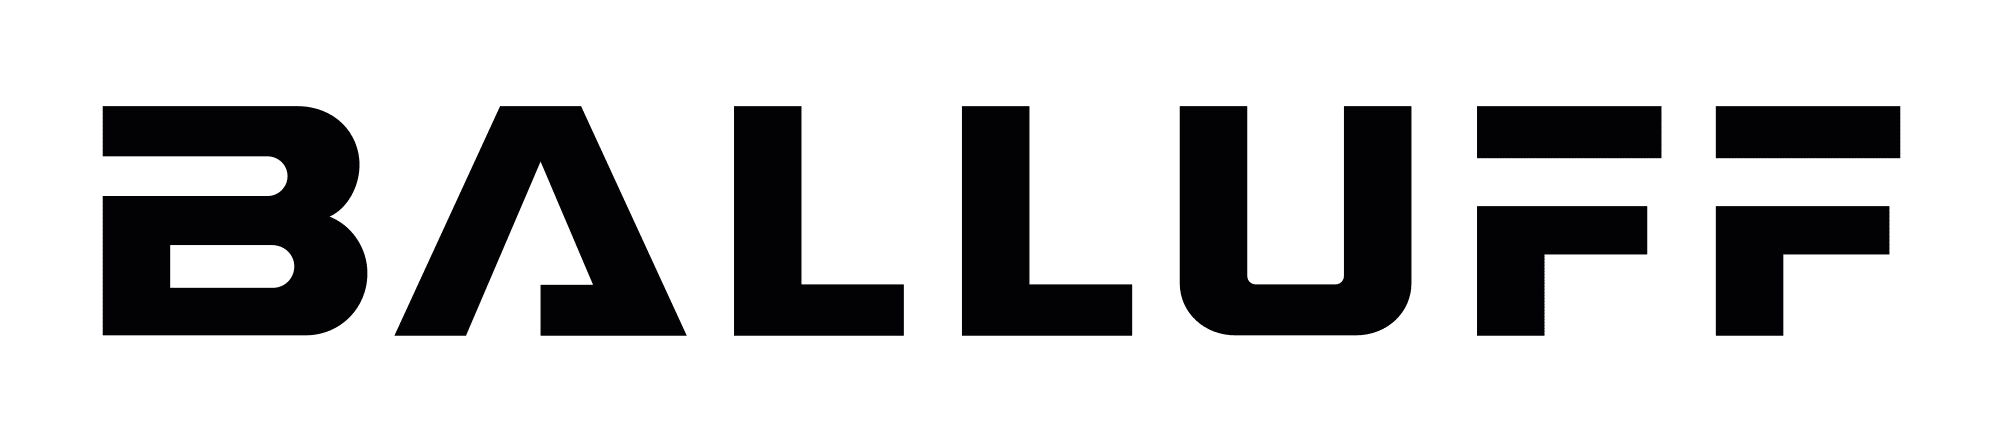 Balluff_Logo.svg_